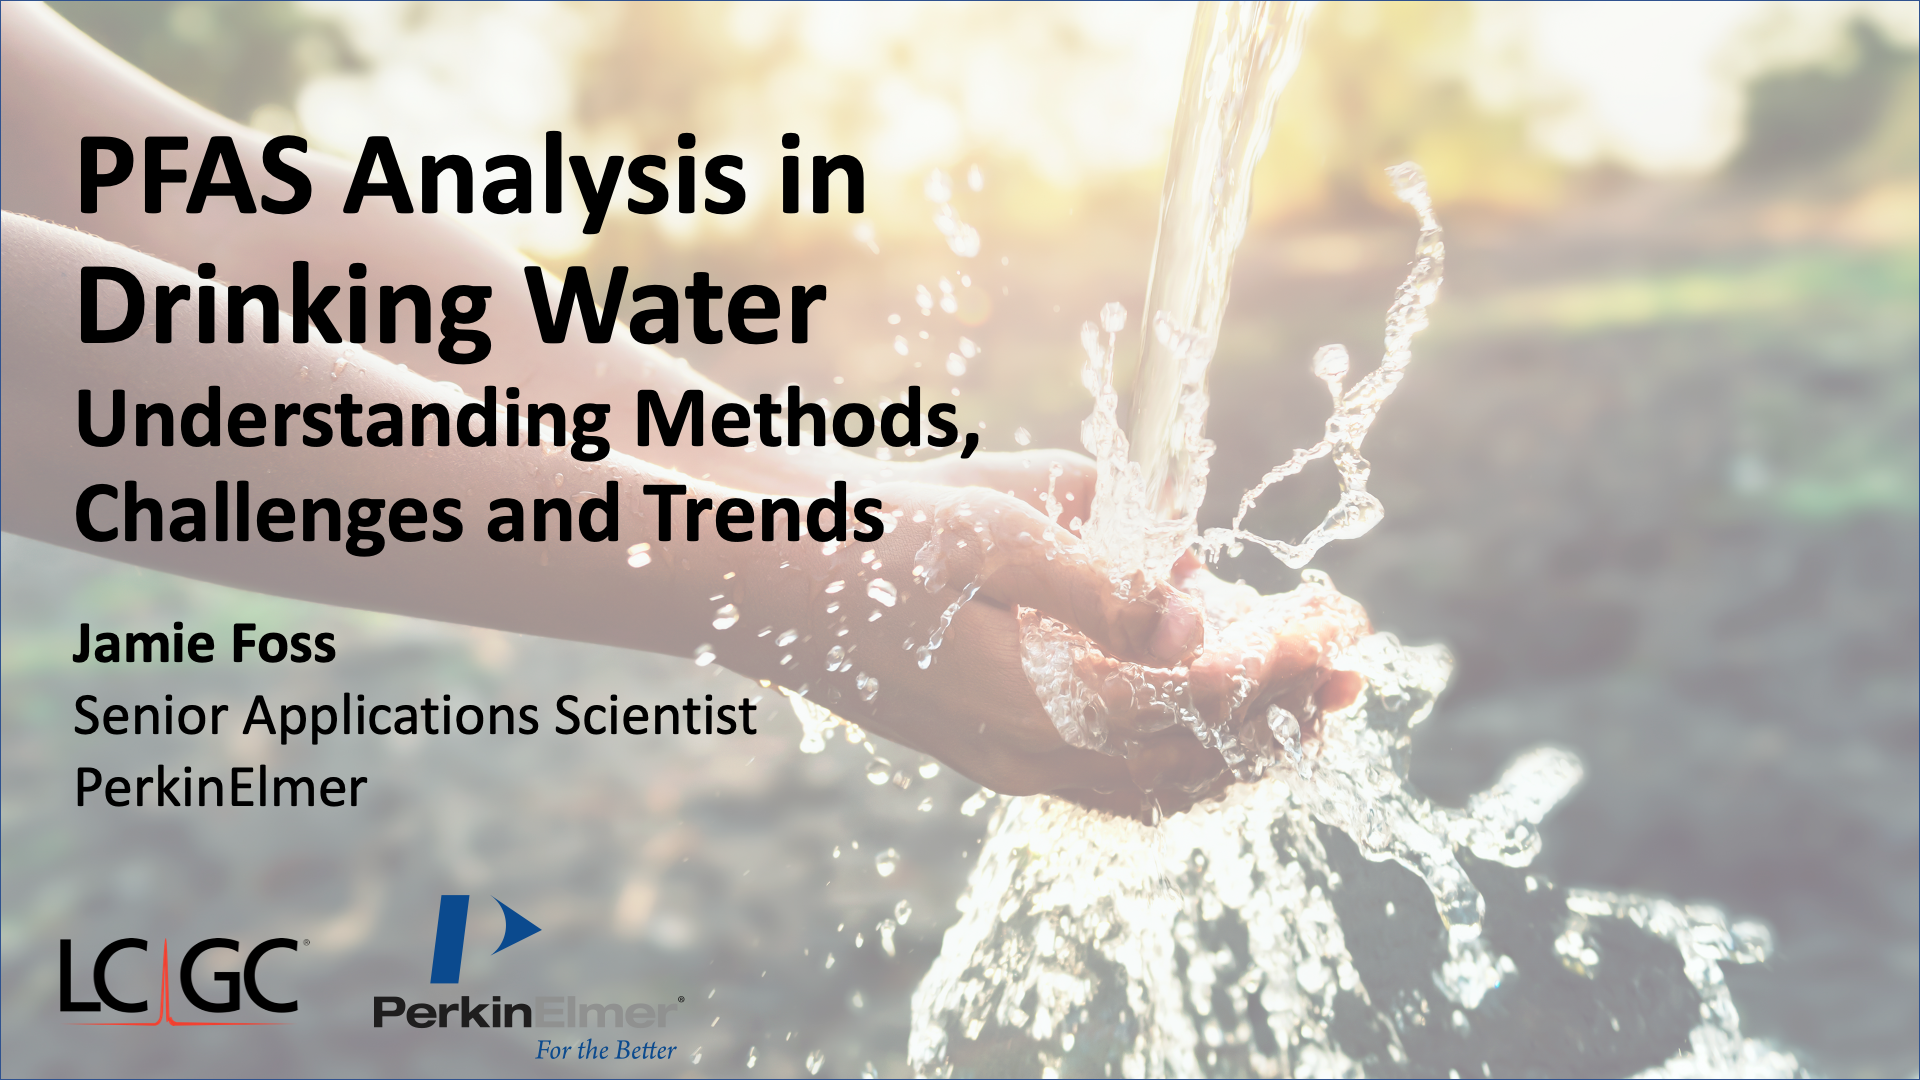 PFAS Analysis in Drinking Water - Understanding Methods, Challenges and Trends